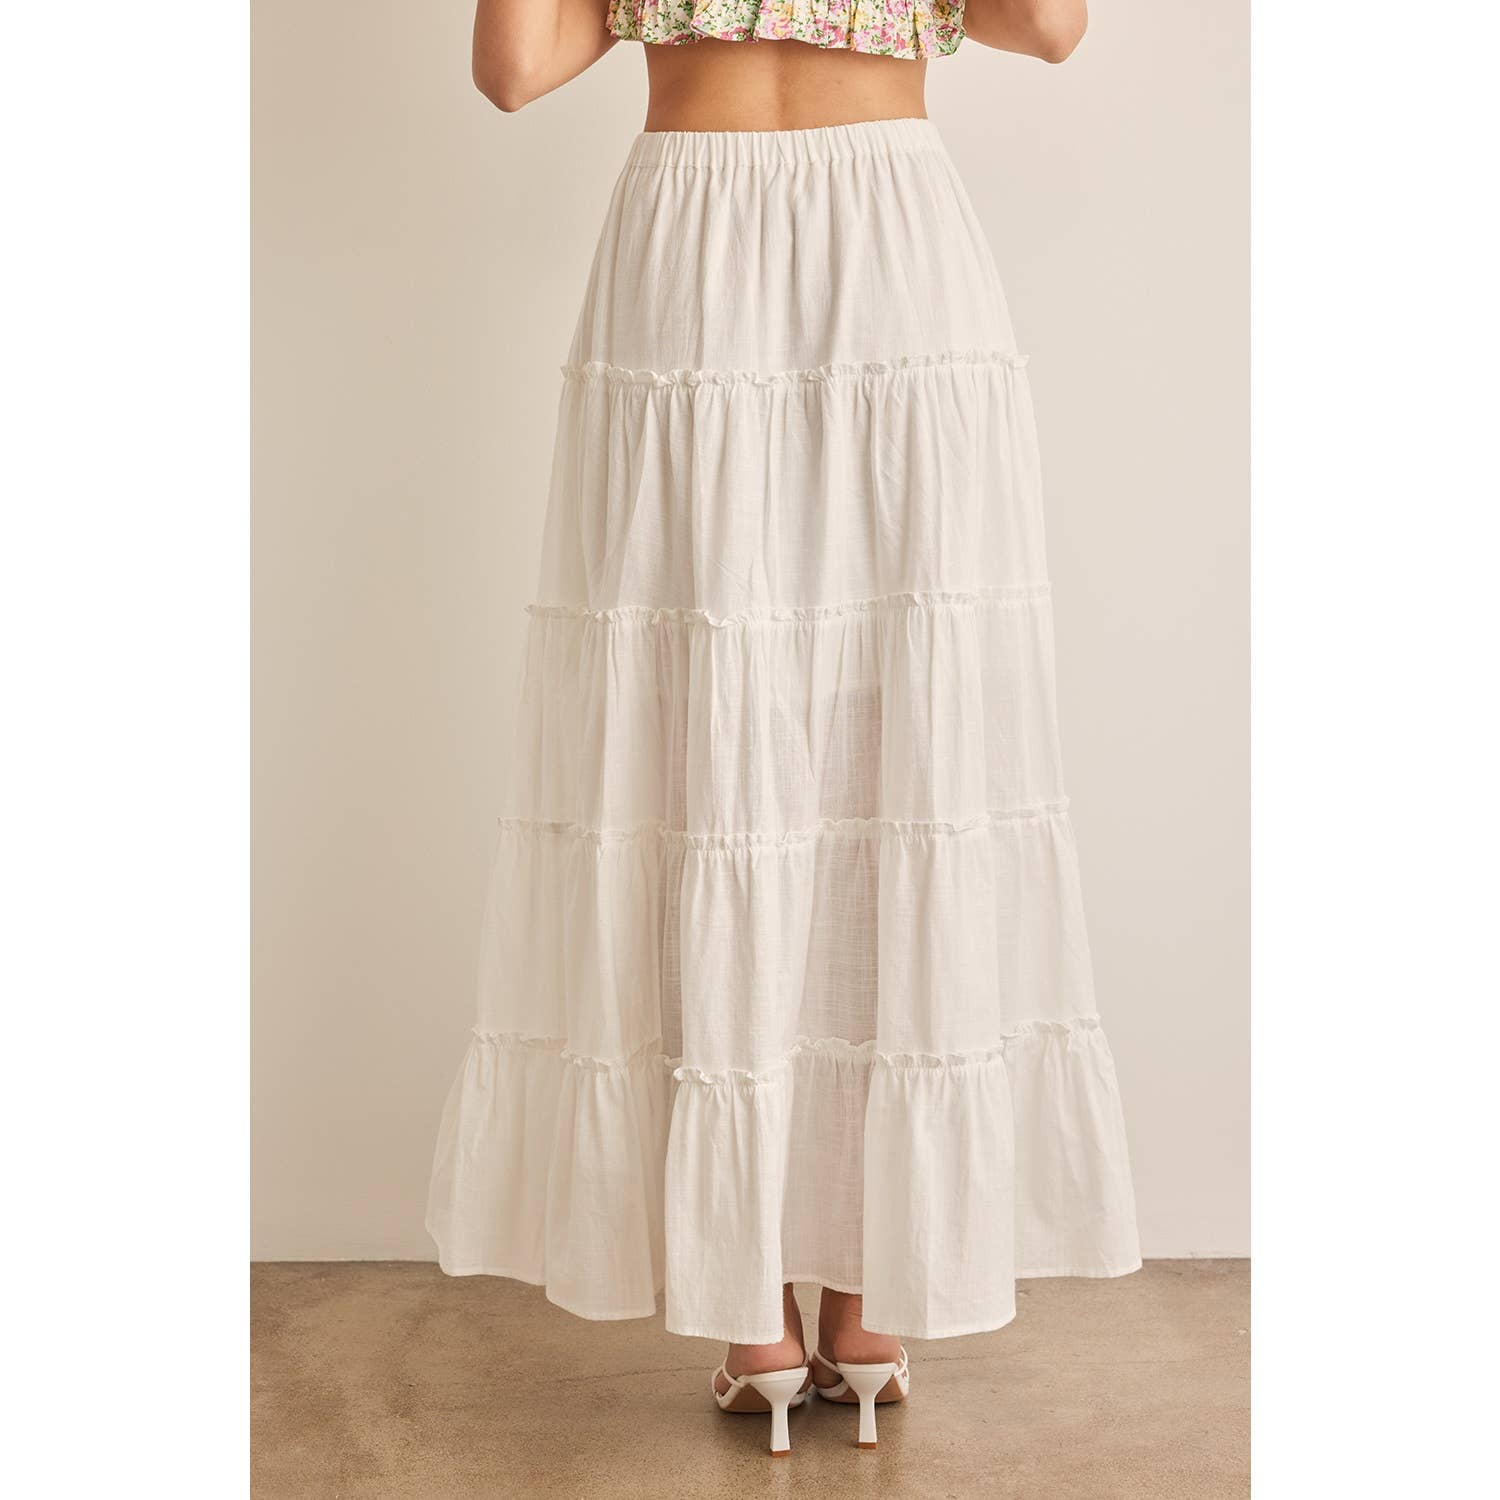 The Cotton Maxi Skirt